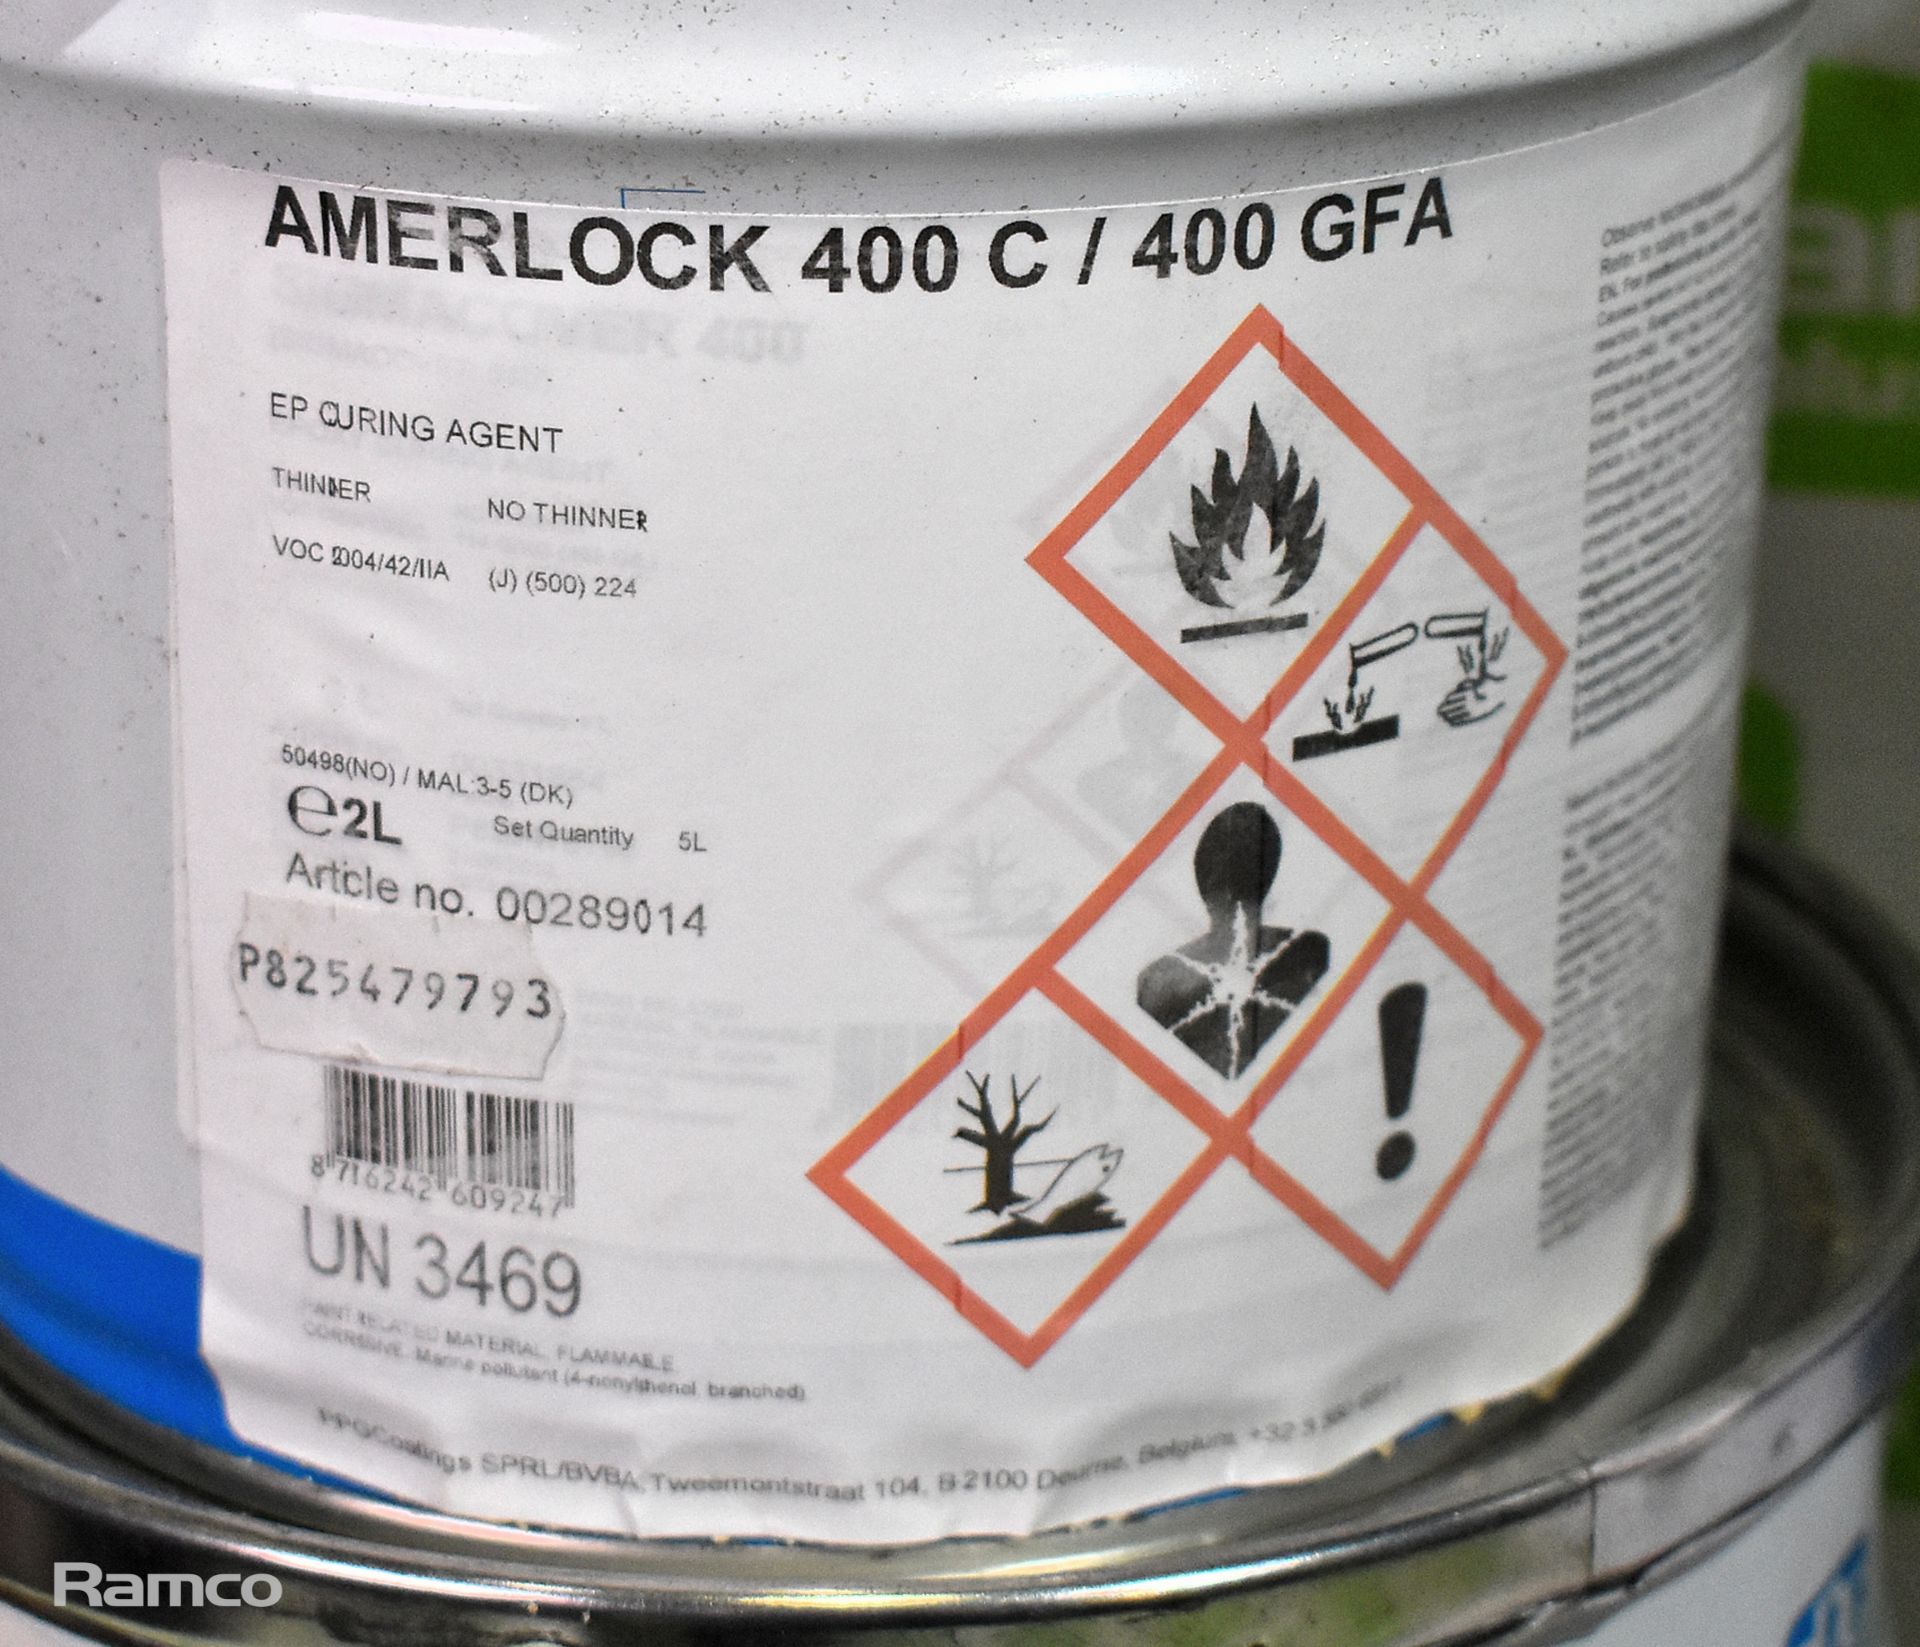 2x sets of Amerlock 400C 2-part black paint - 2 tins per set - Image 3 of 6